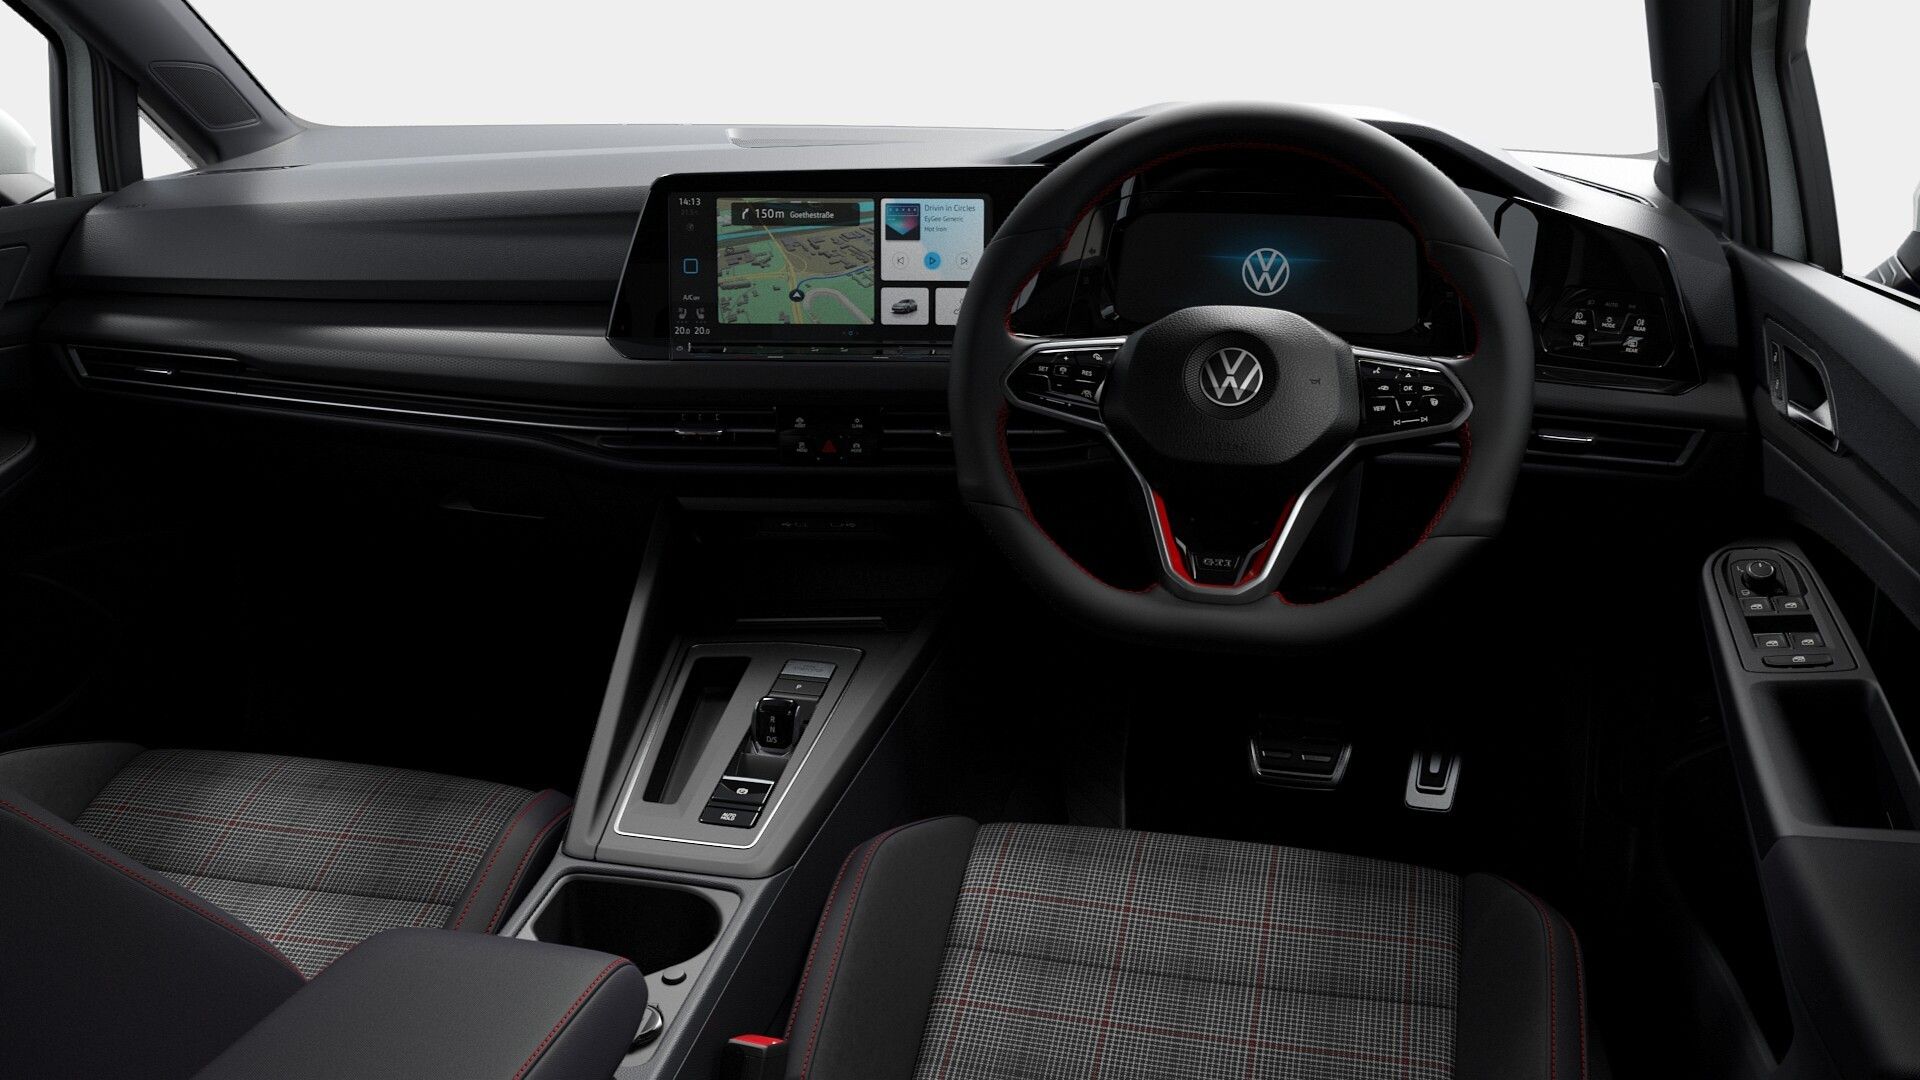 2021 Volkswagen Golf 8 GTI Hatchback Image 8